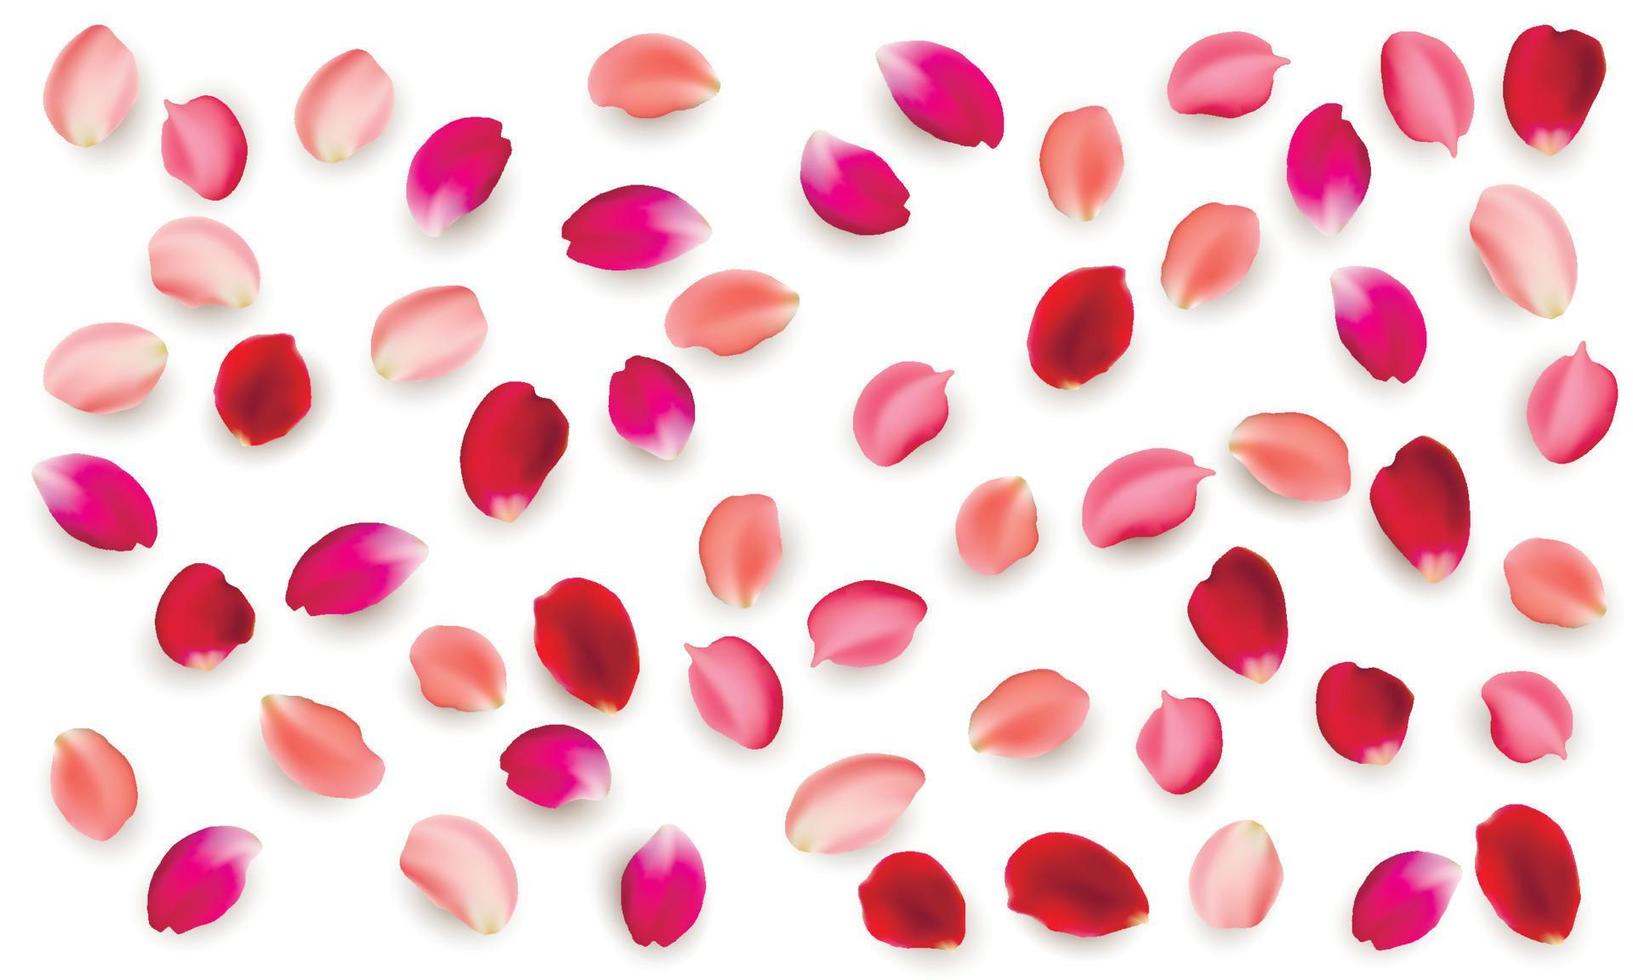 Realistic vector elements set of rose petals. Red petals of rose flower